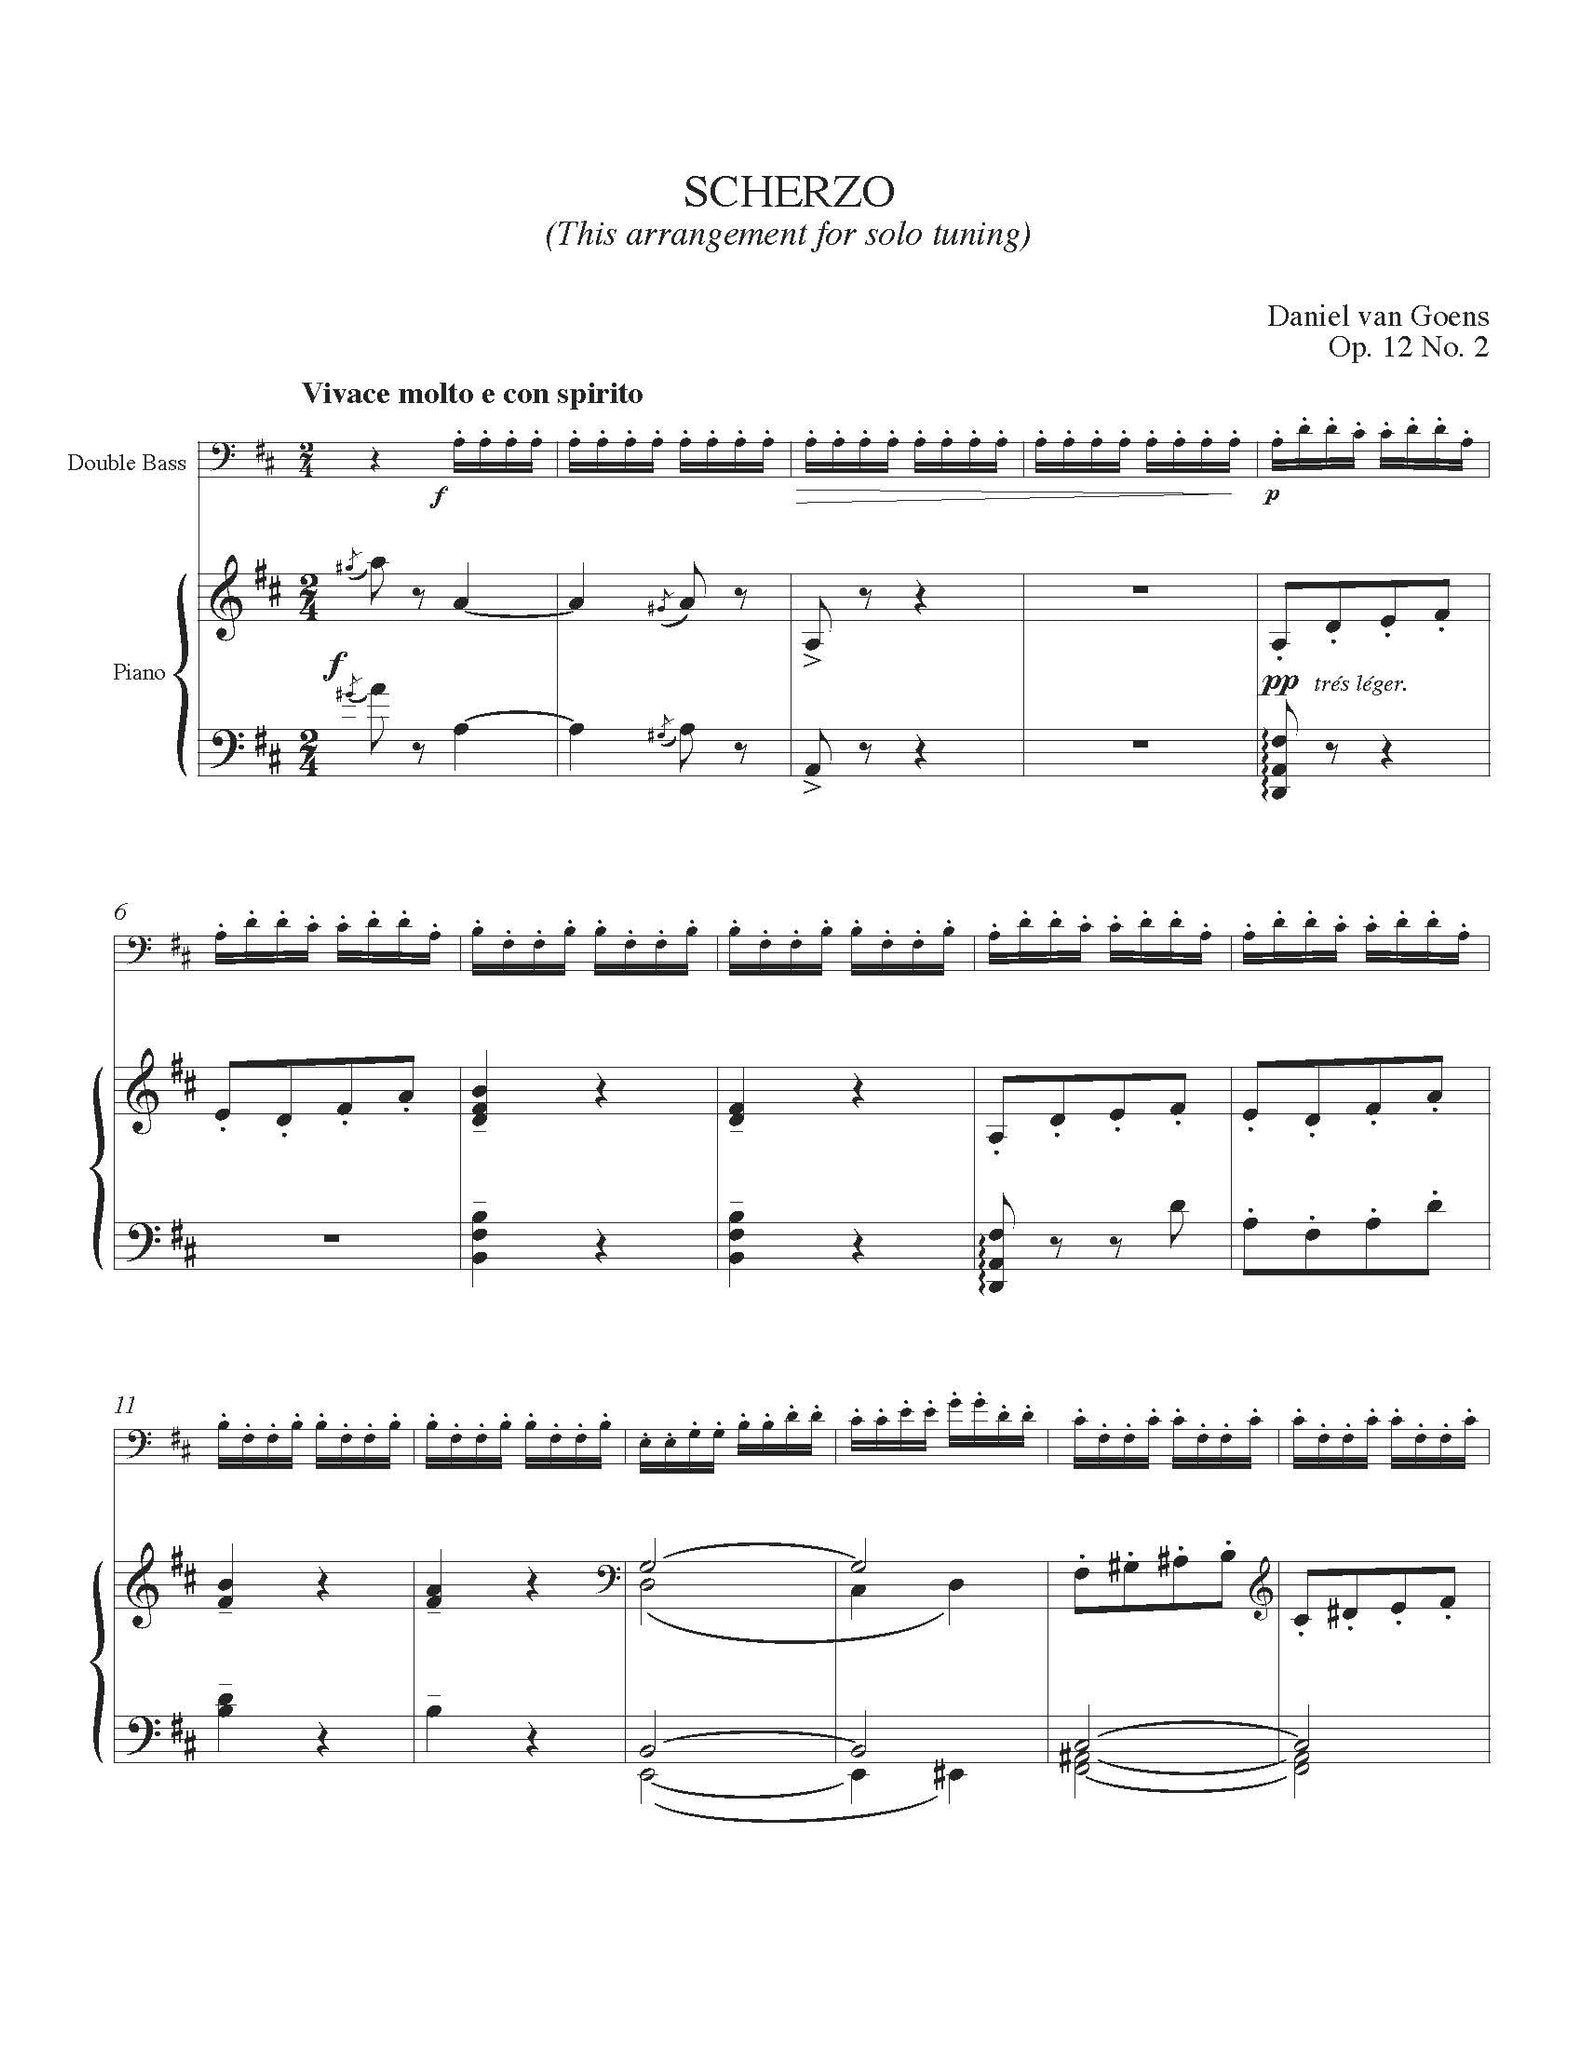 Goens Scherzo solo tuning page 1